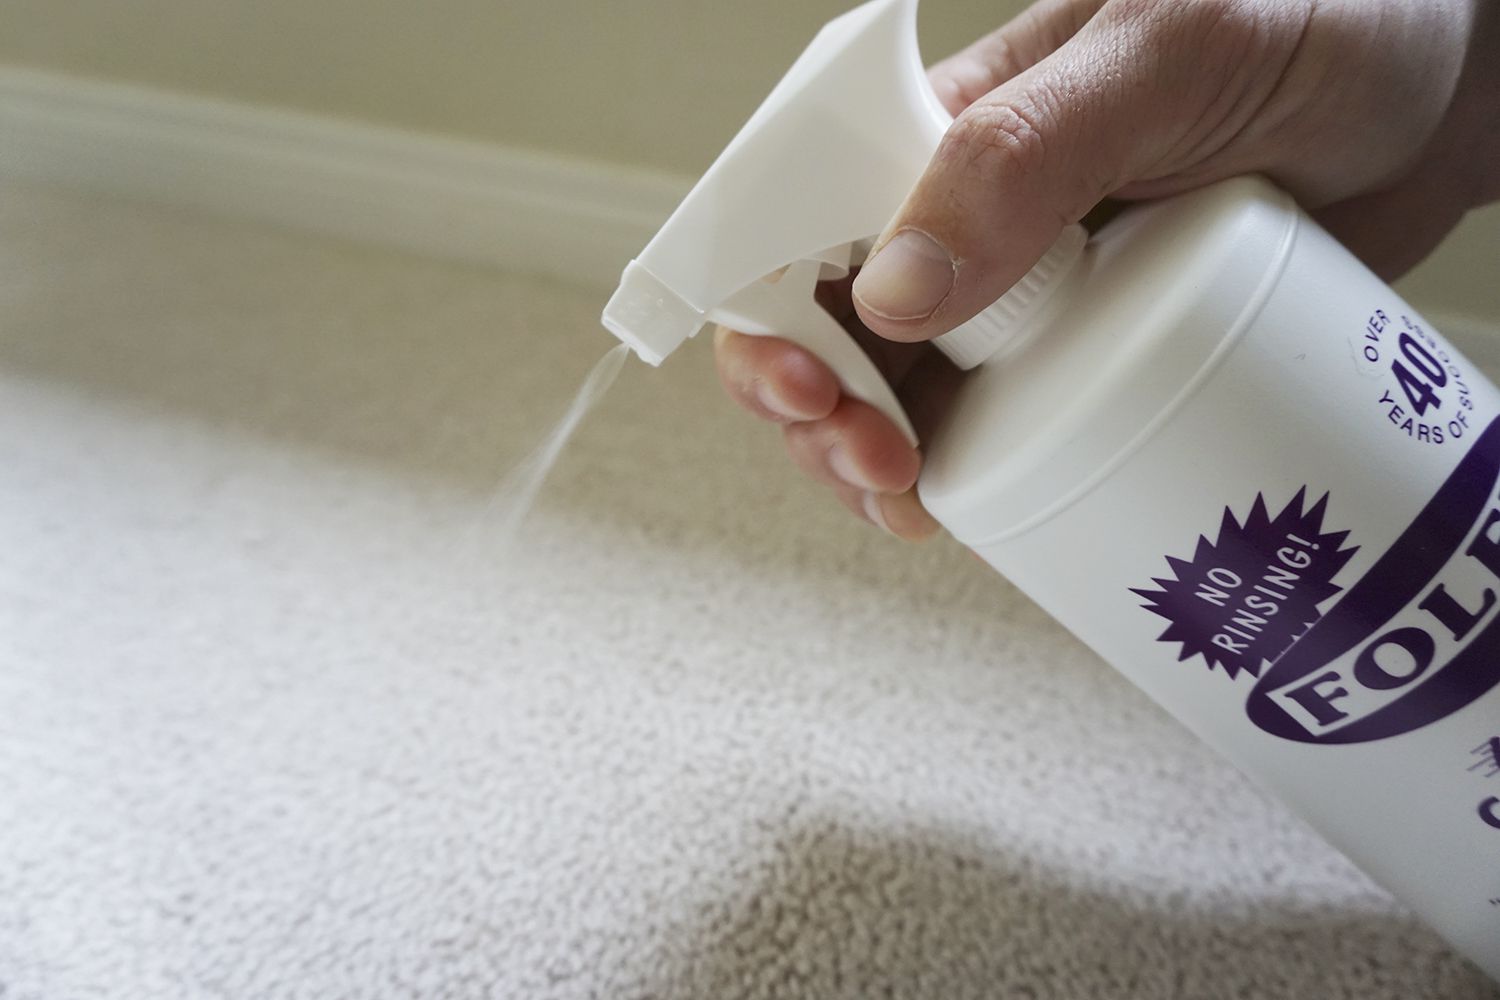  Blue Magic 900 Carpet Stain & Spot Lifter - 22 oz. Aerosol Can  : Health & Household